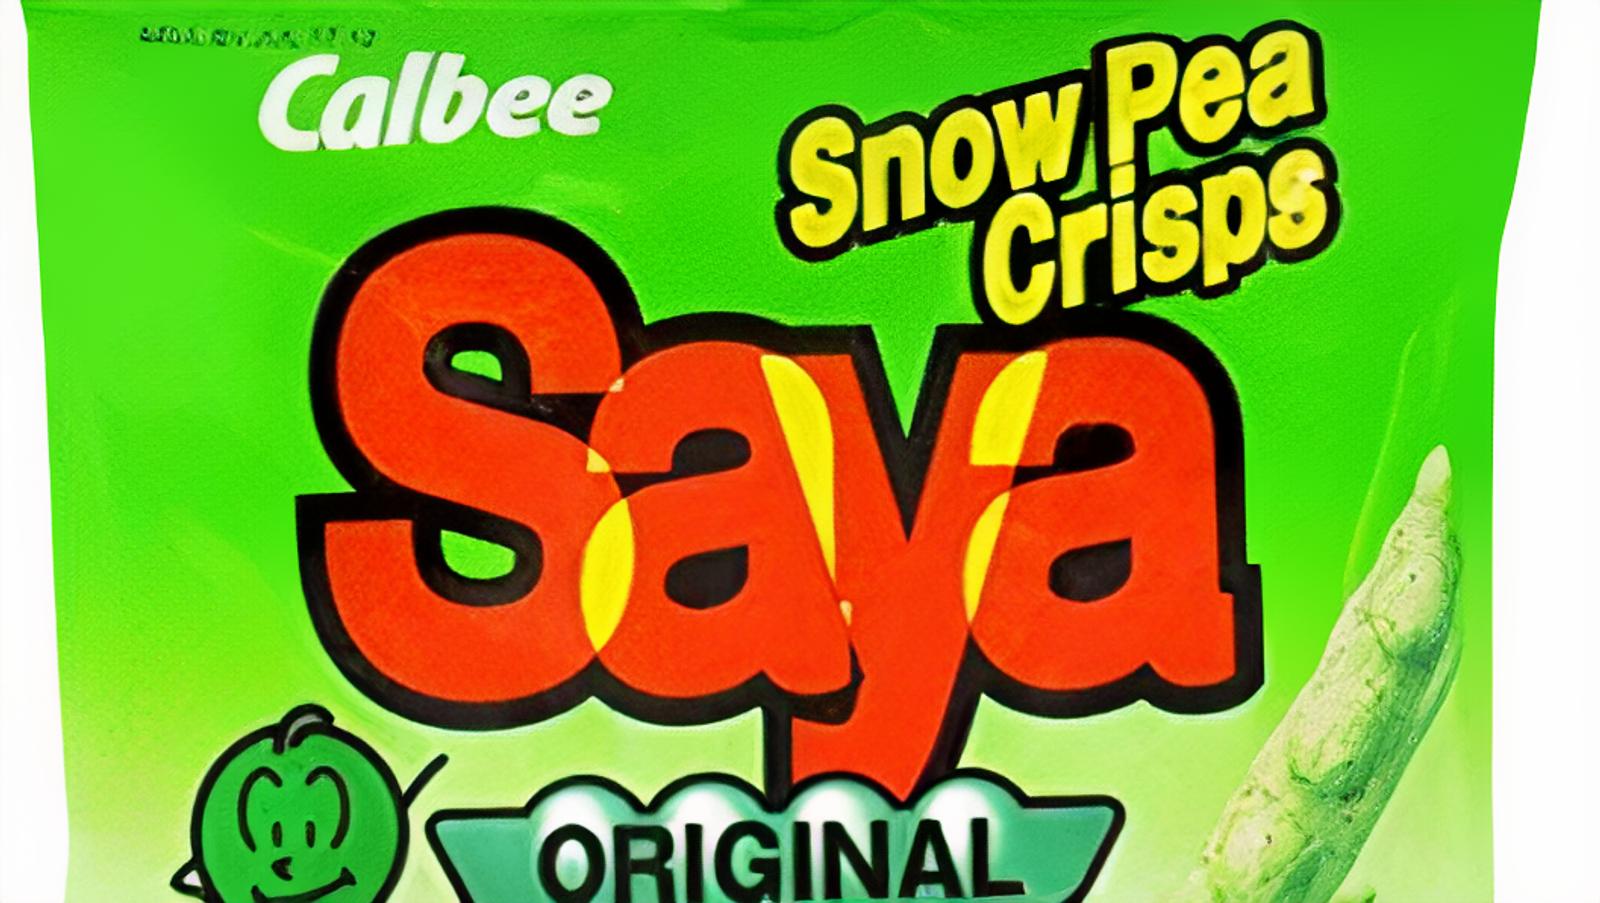 Calbee Saya Original Snow Pea Crisps